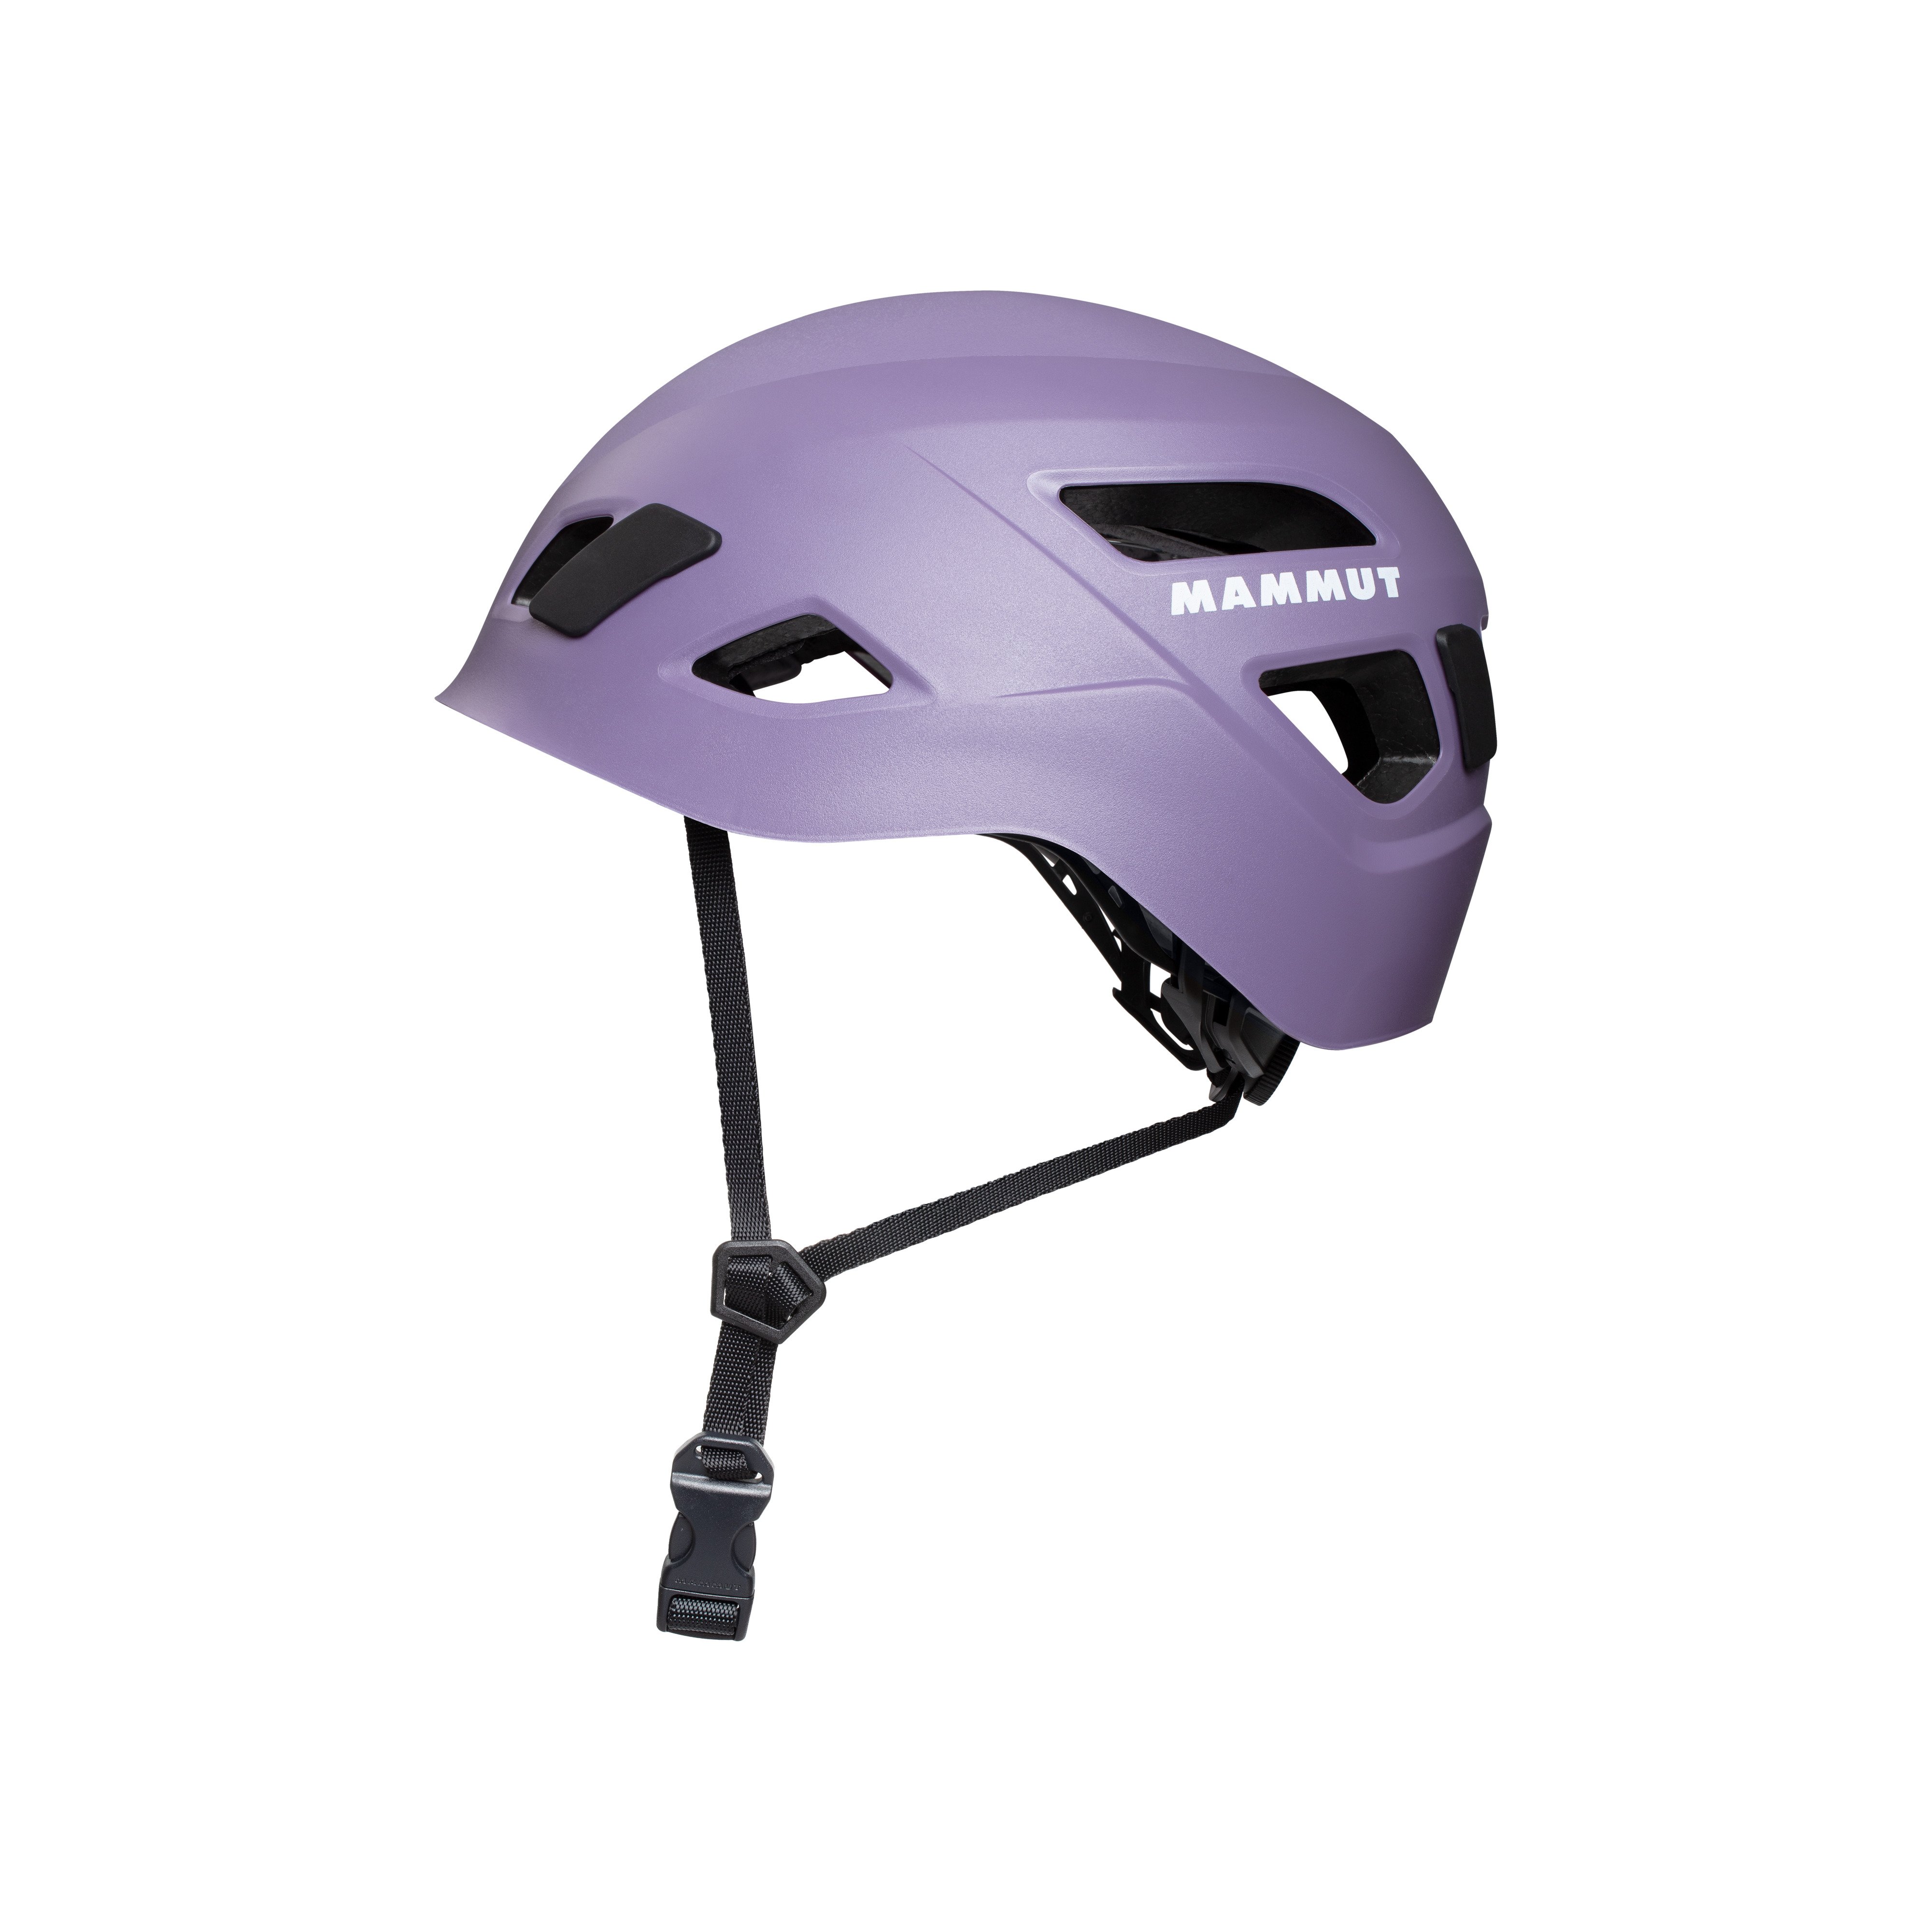 Skywalker 3.0 Helmet - purple, one size product image